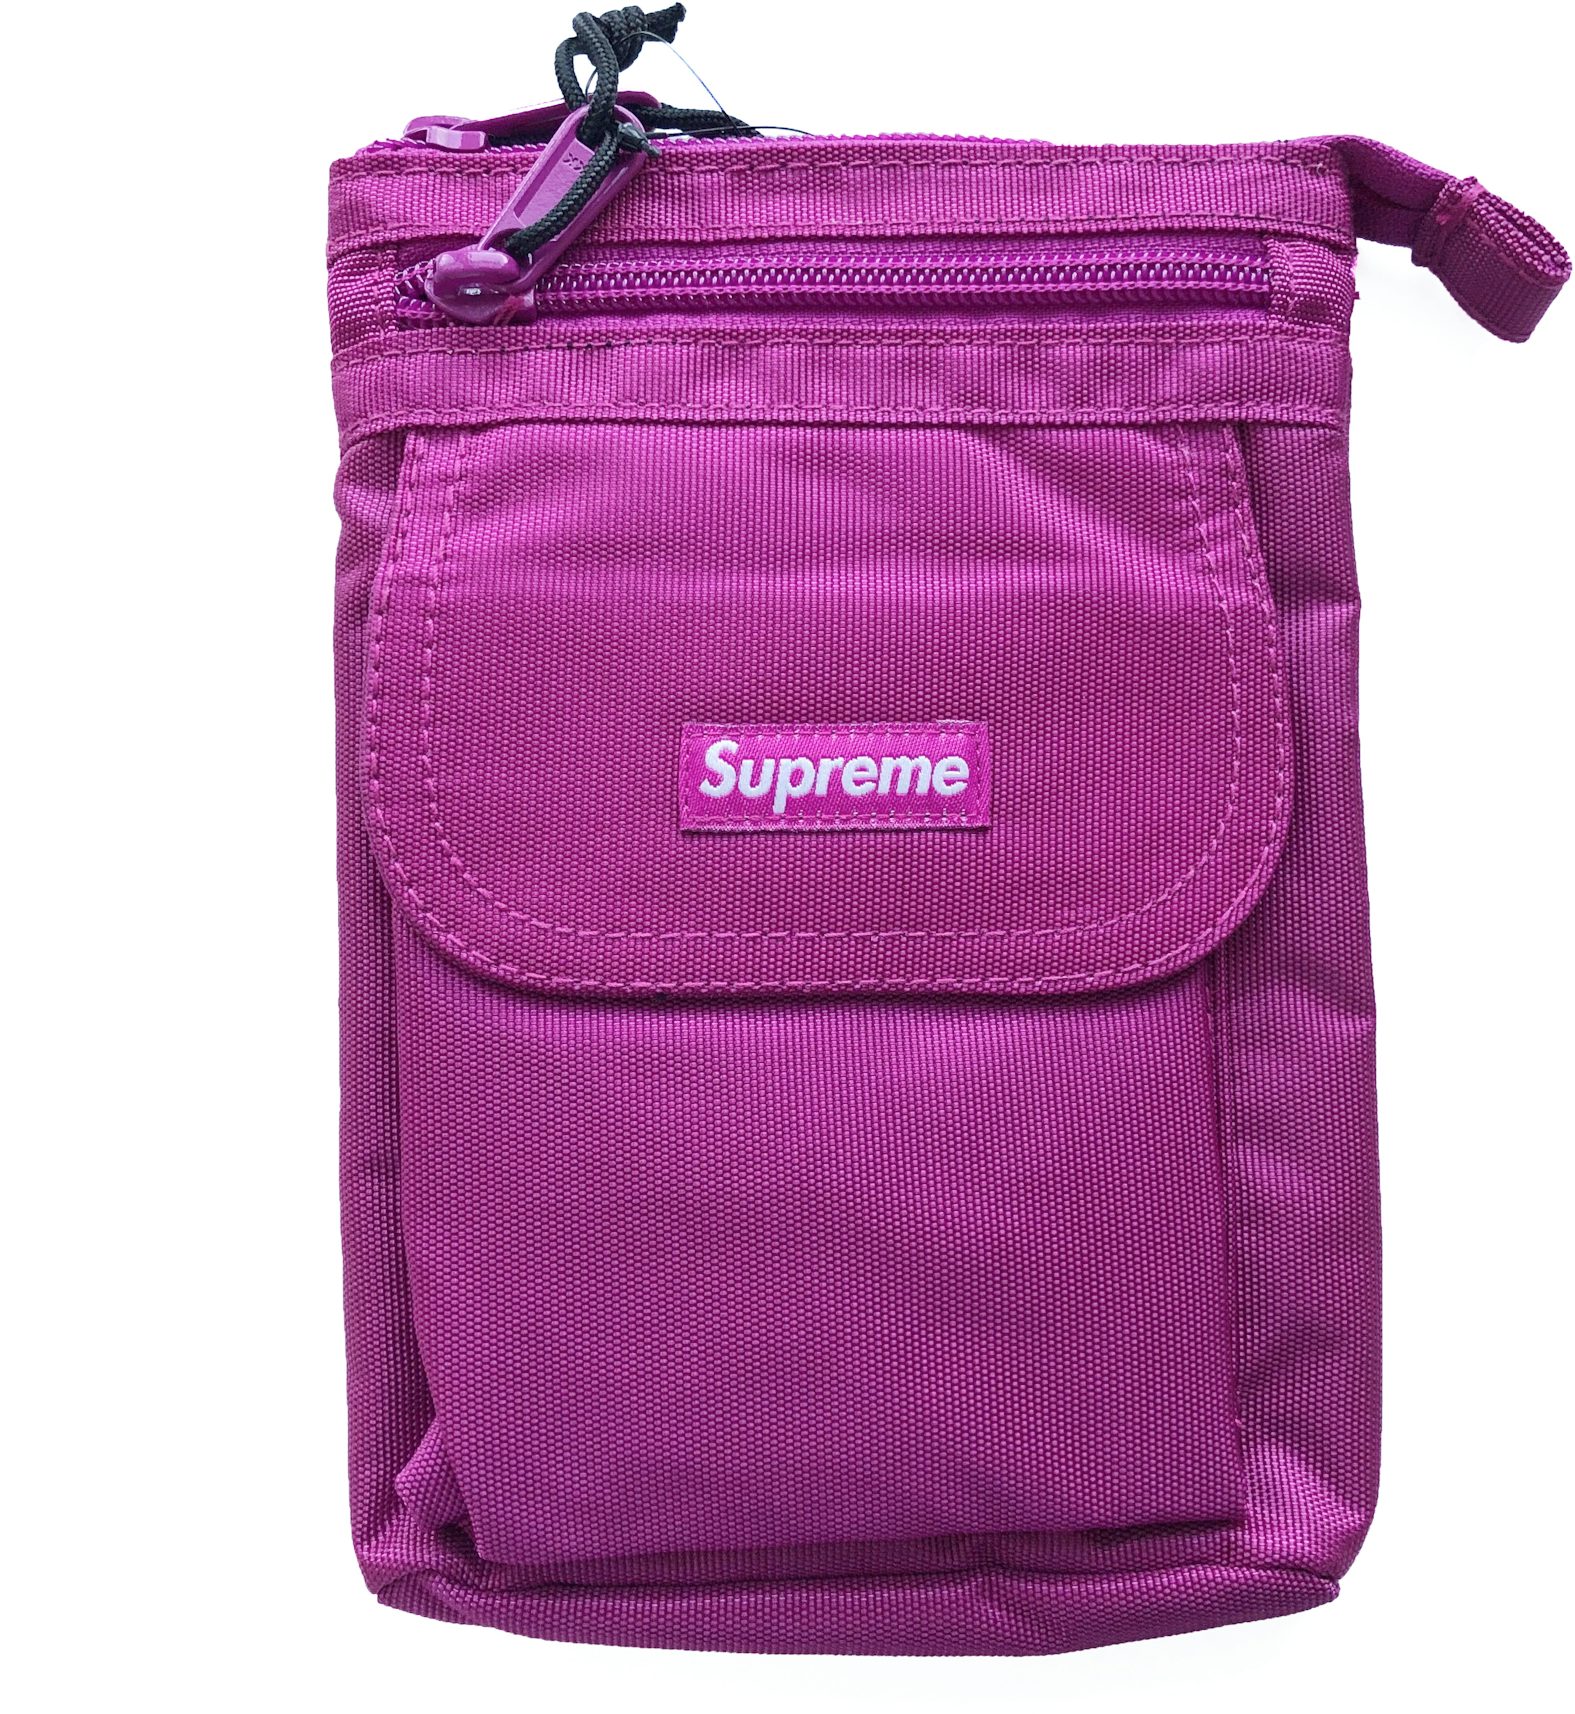 Supreme Women's Bags